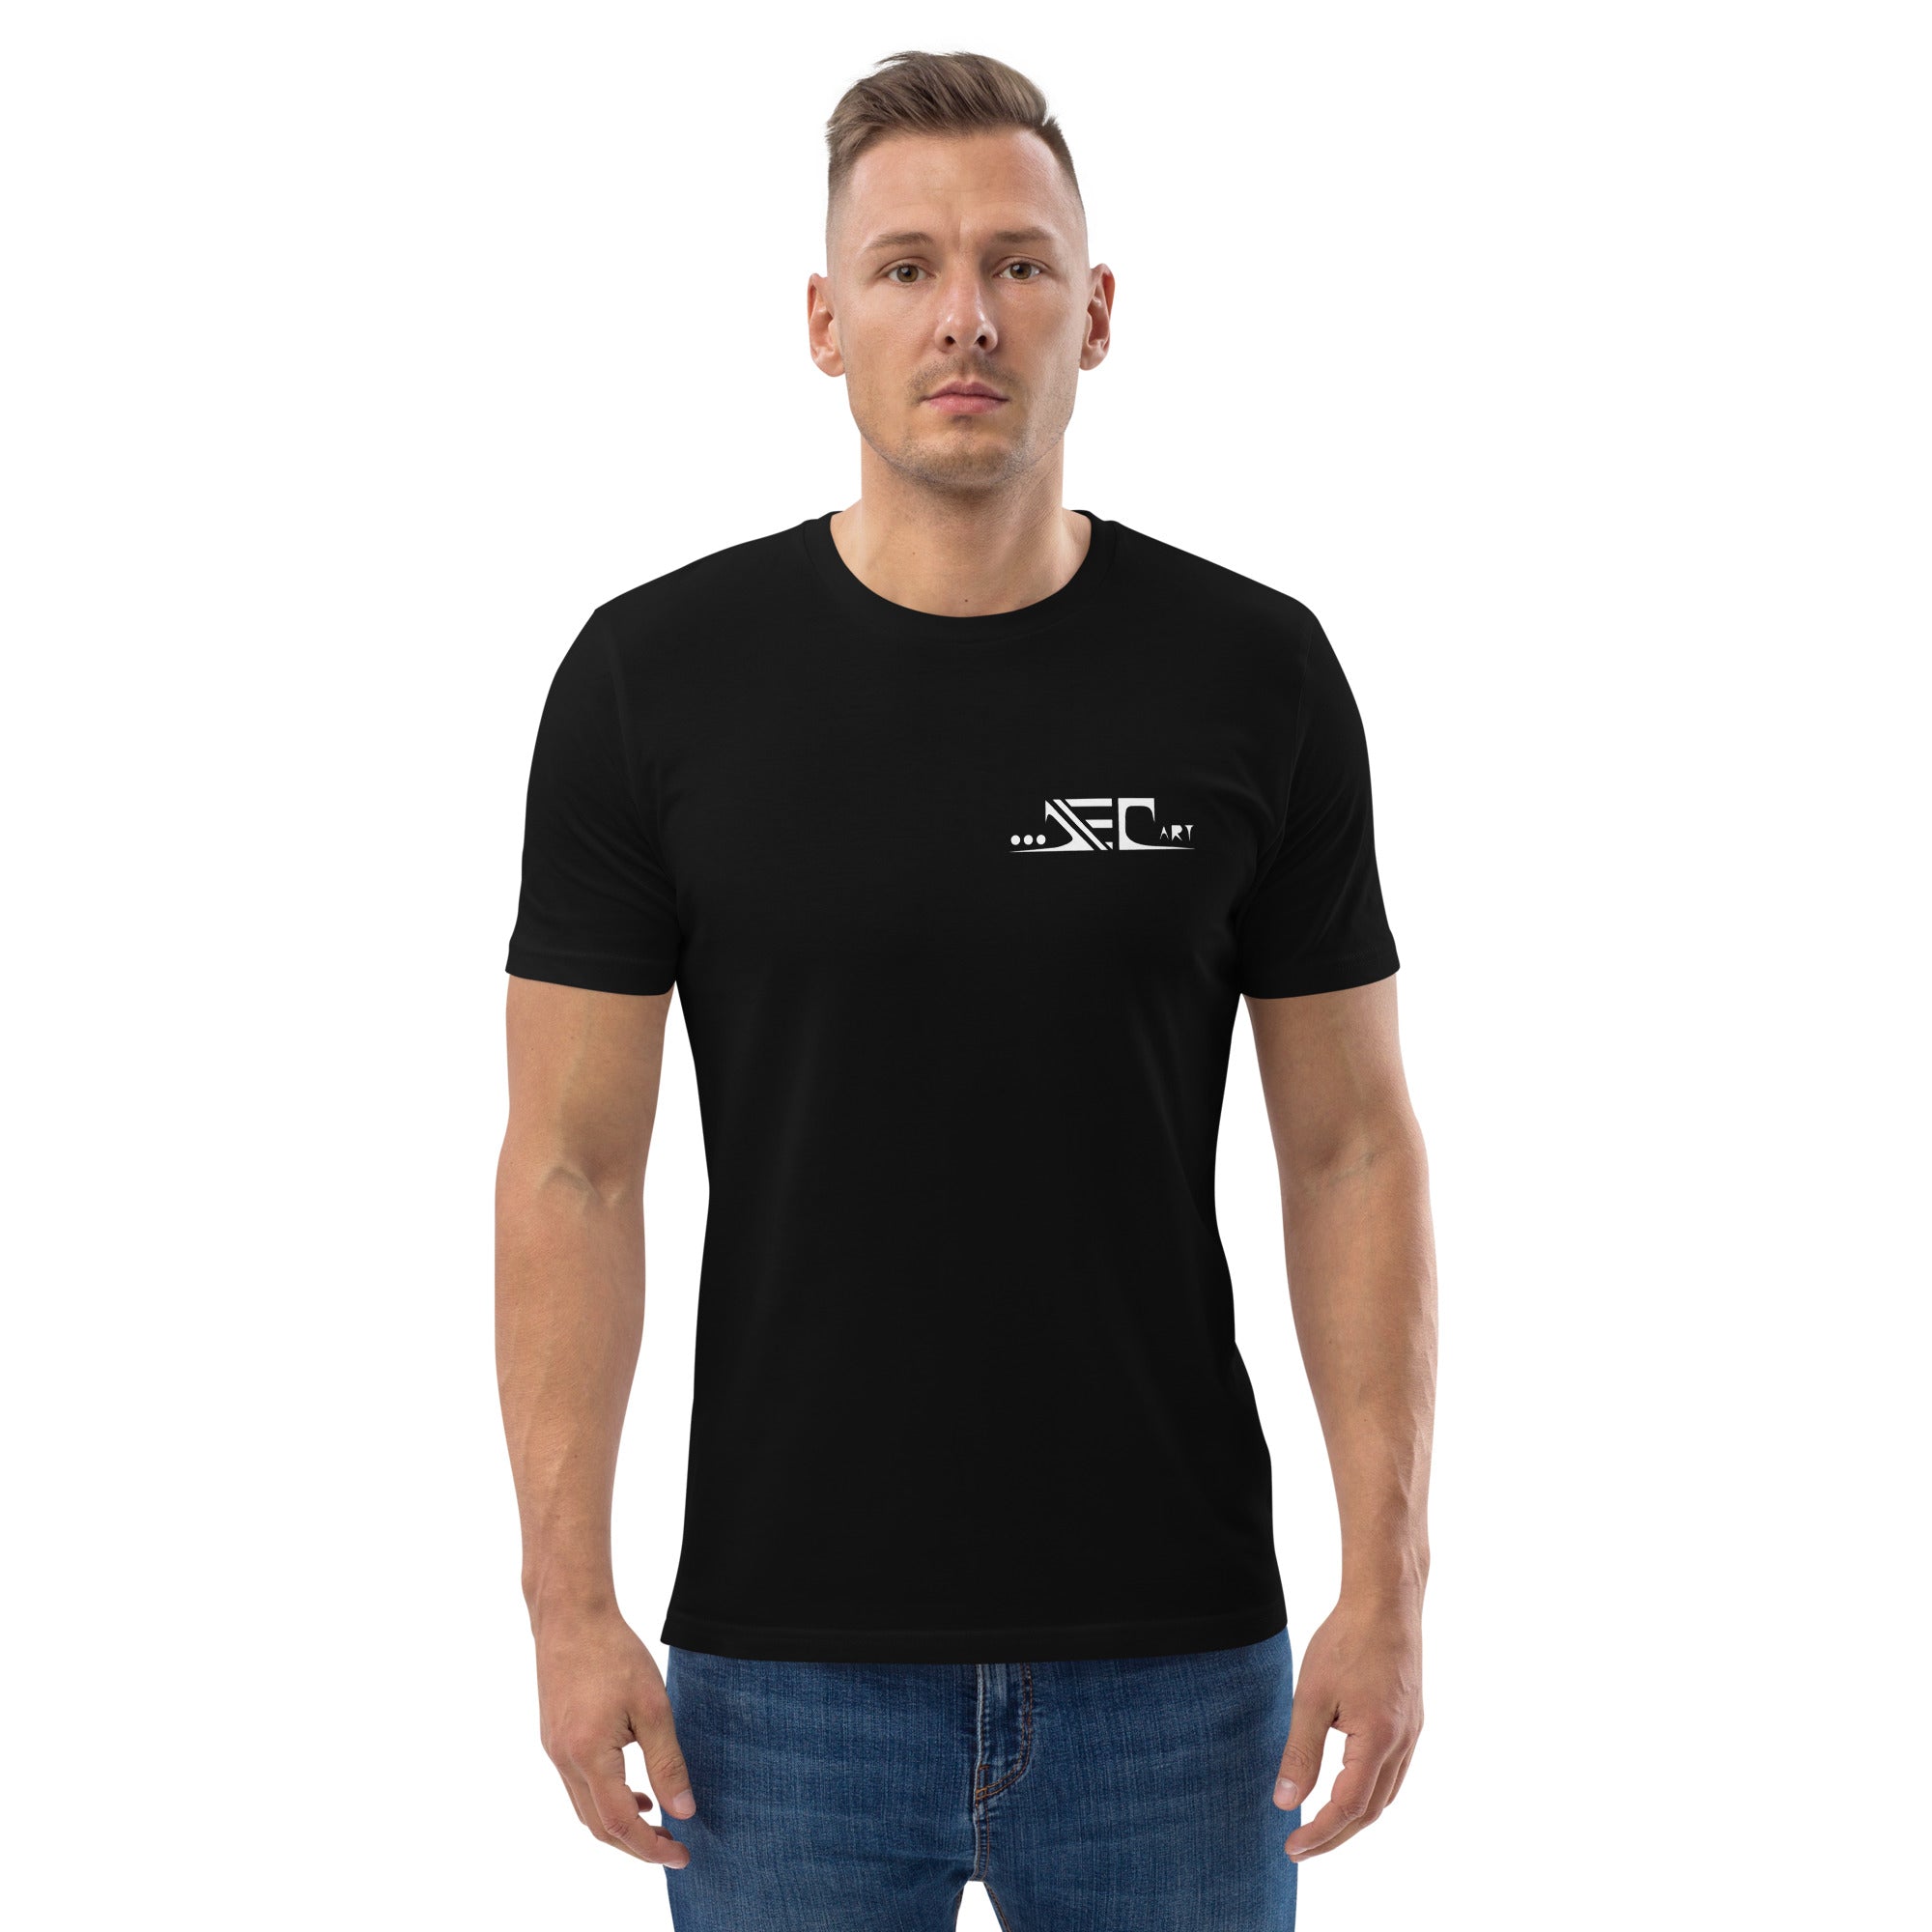 Unisex t-shirt - Janus Staff